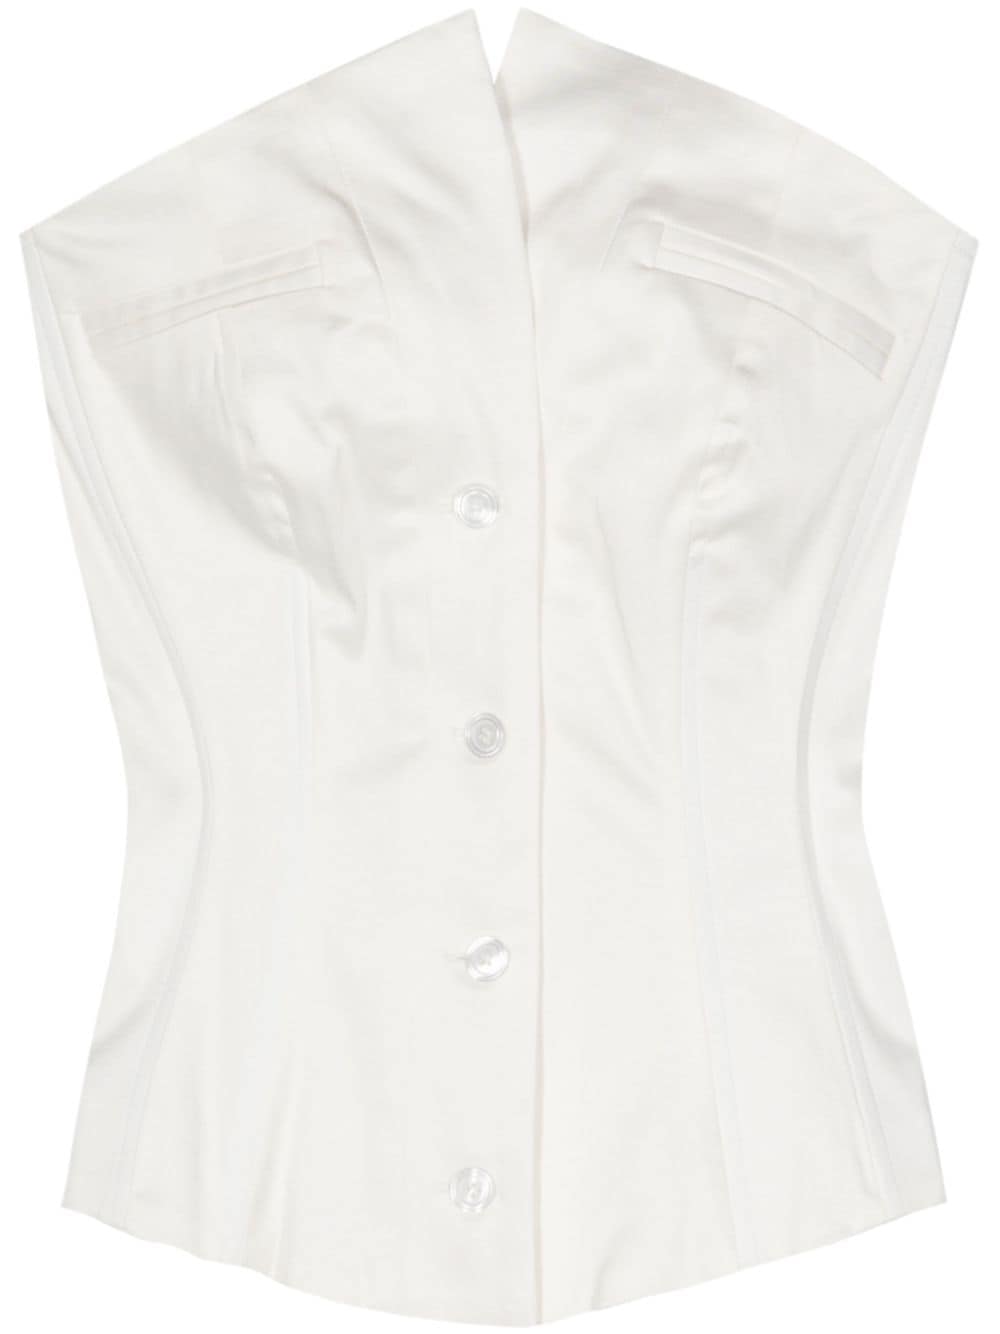 POSTER GIRL Court corset top - White von POSTER GIRL